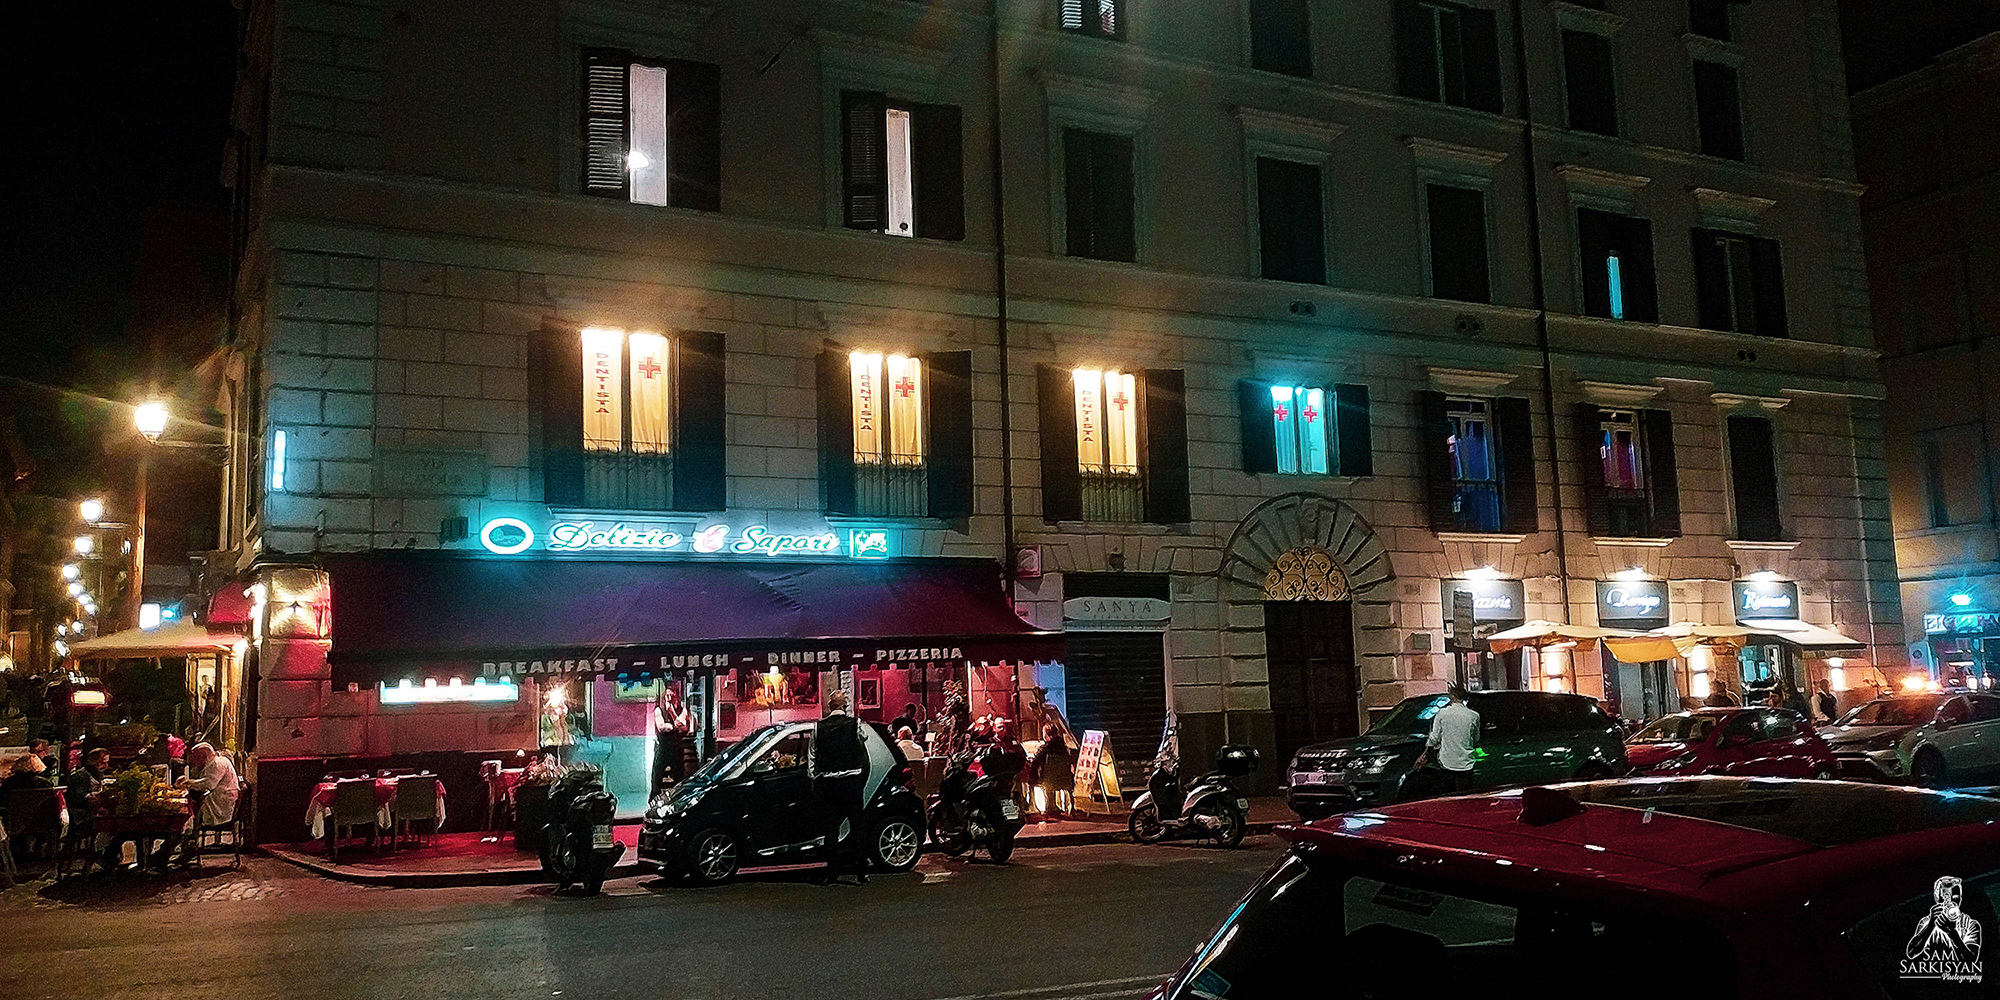 Night view of Rome, pizzeria